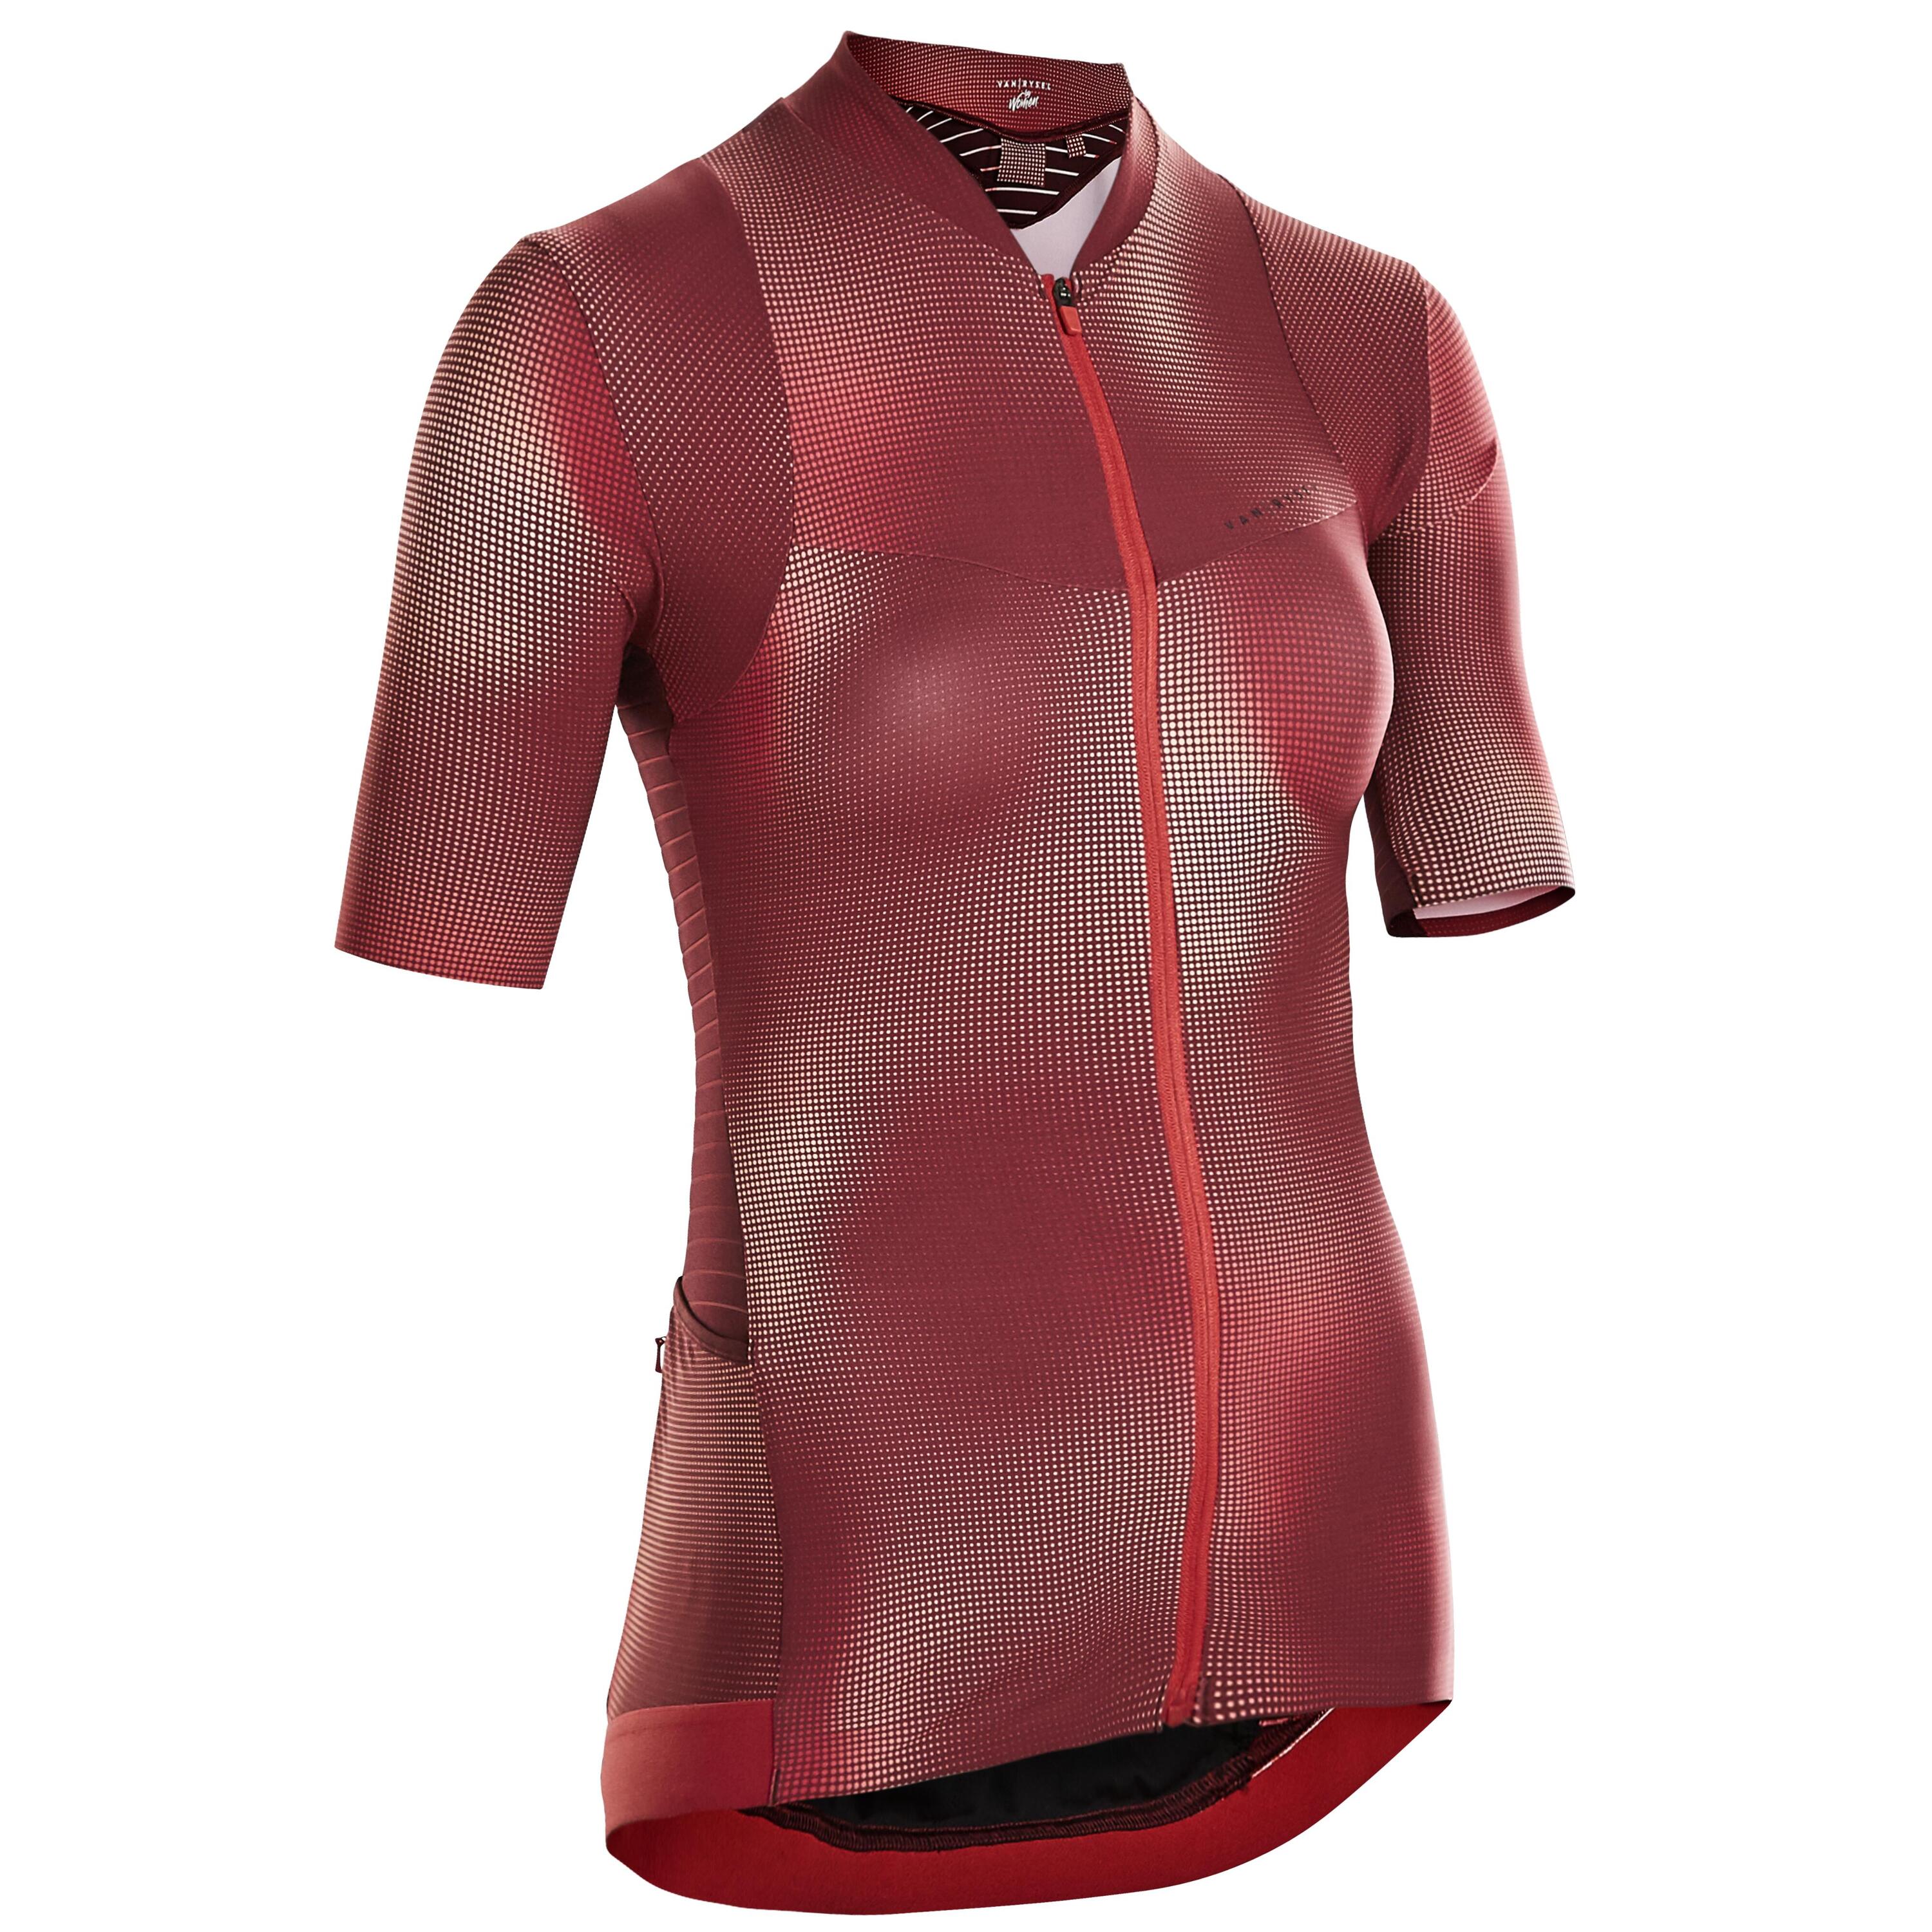 Women's Short-Sleeved Cycling Jersey RCR - Vibrant Raspberry 1/10